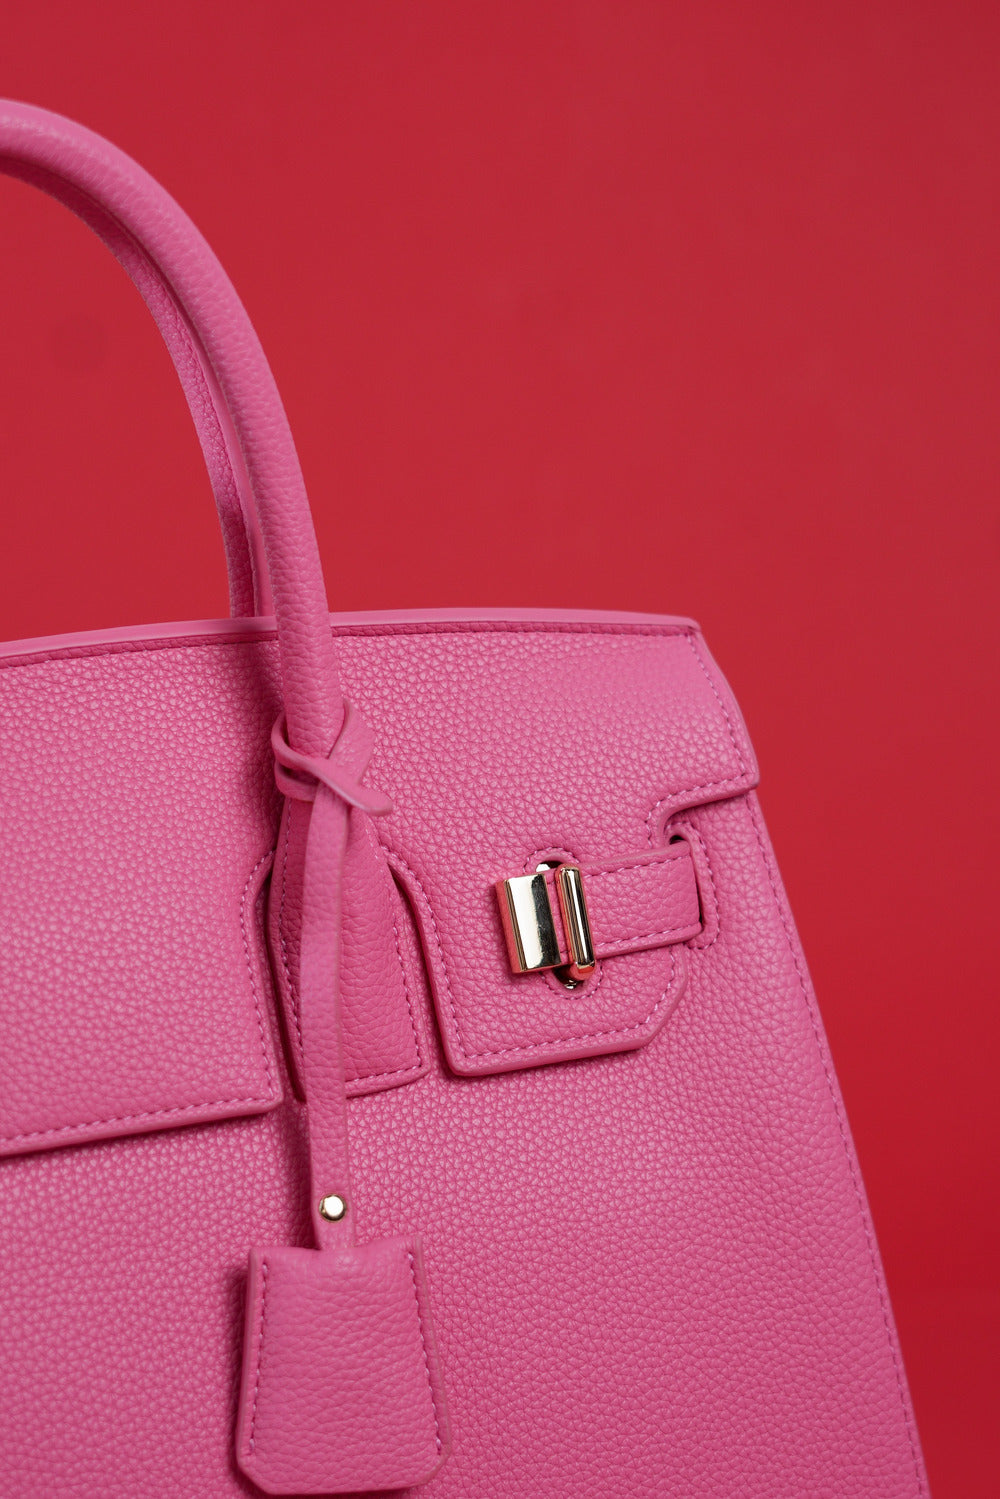 Classy Pink Leather Handbag